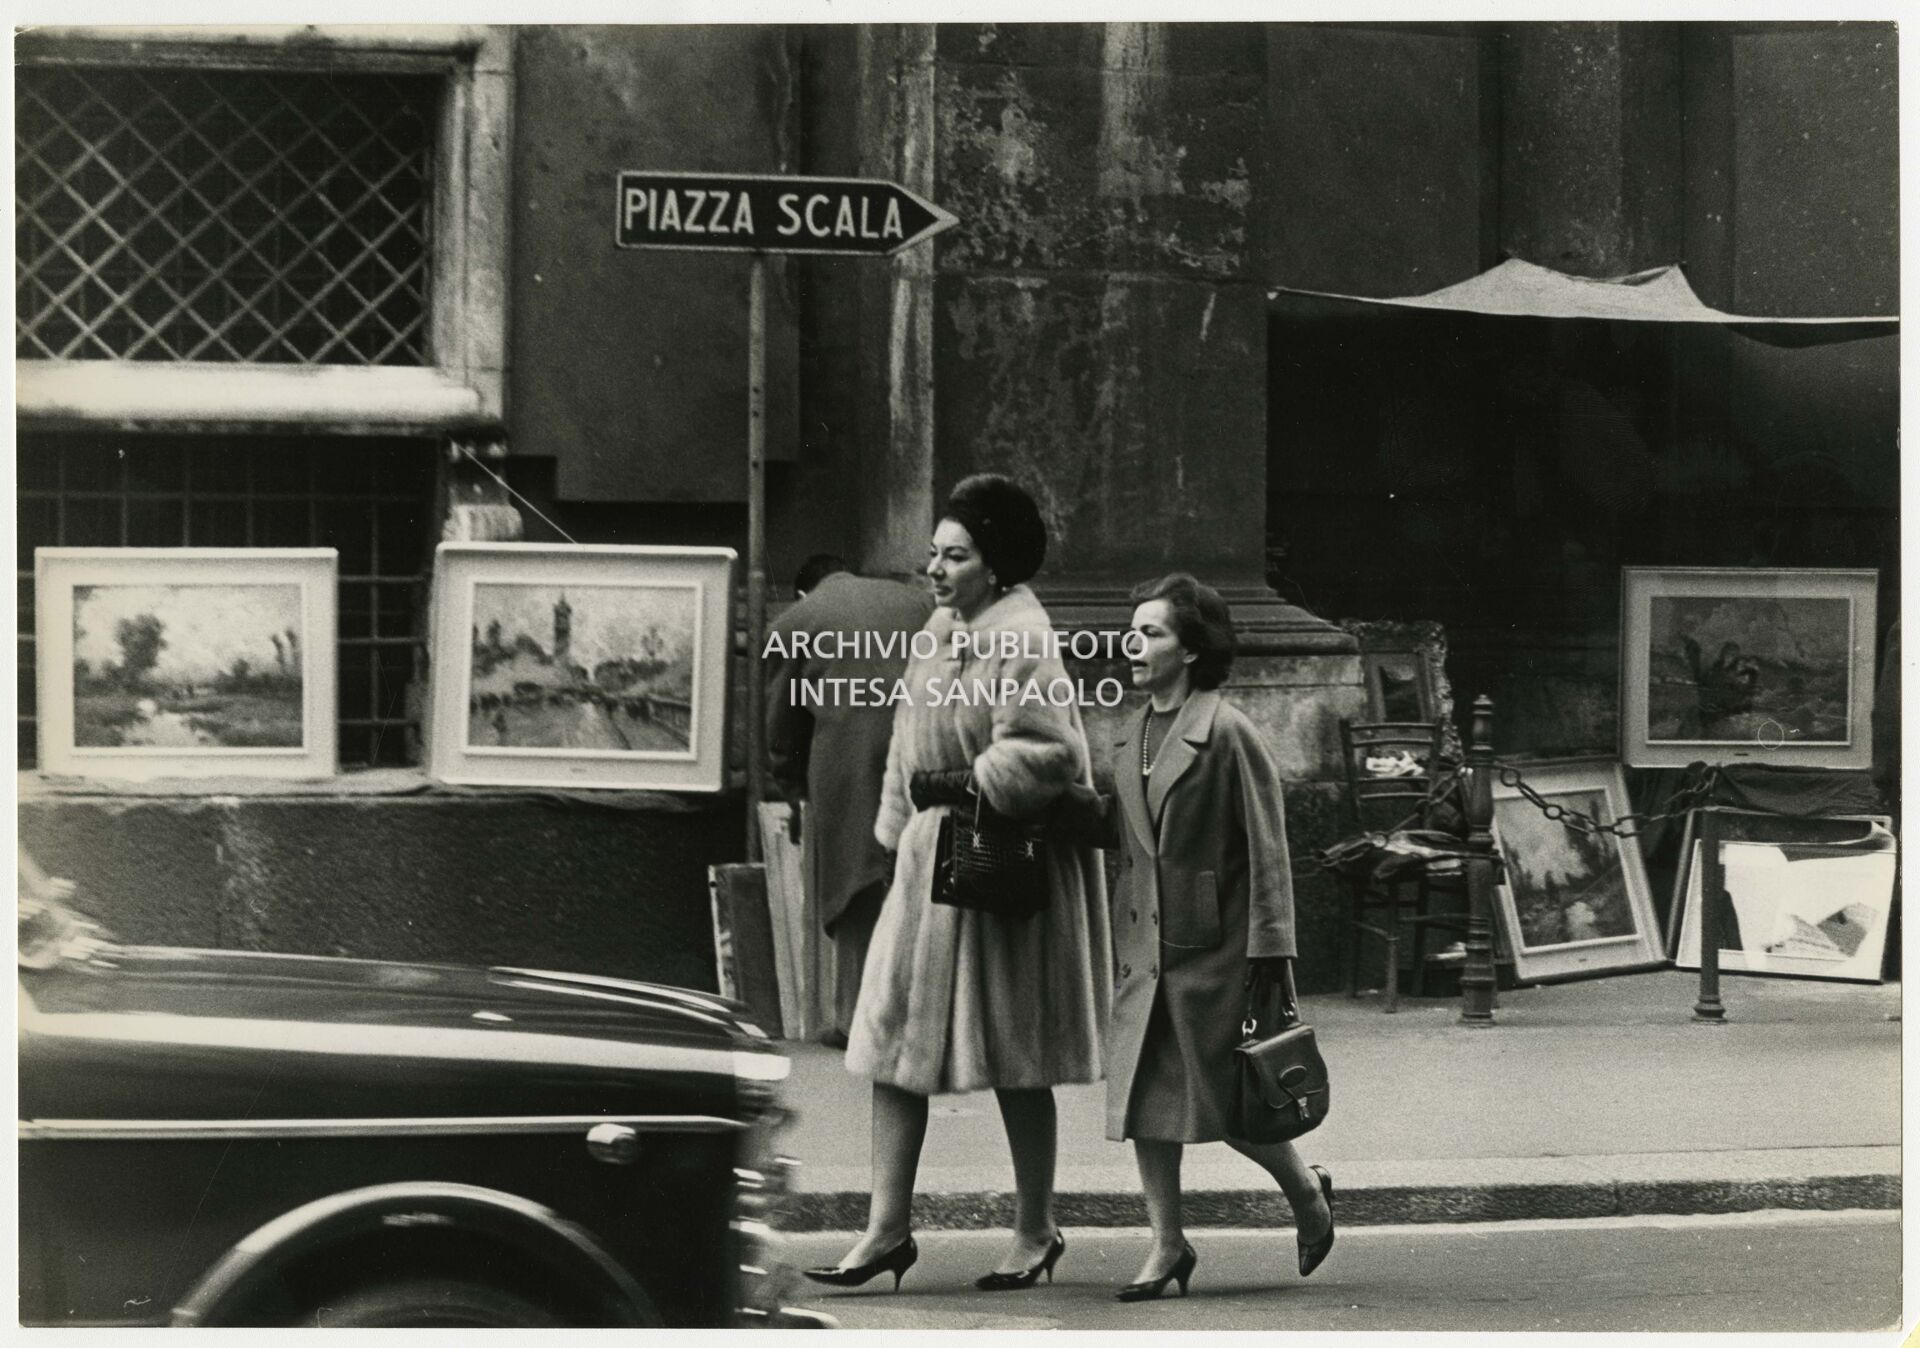 Maria Callas strolls through the city centre streets with her secretary Bruna Lupoli